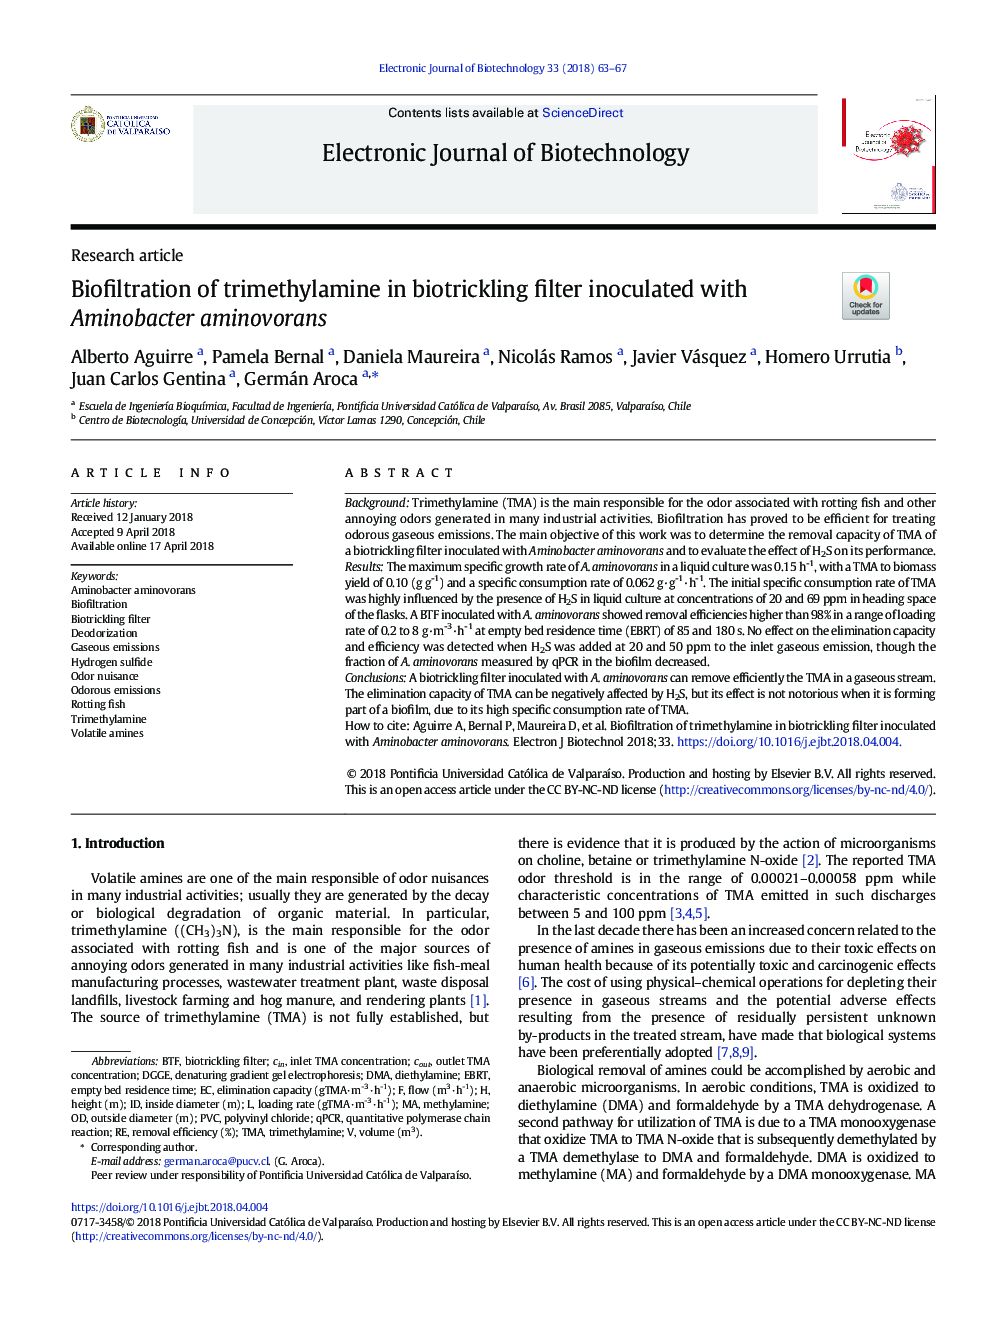 Biofiltration of trimethylamine in biotrickling filter inoculated with Aminobacter aminovorans